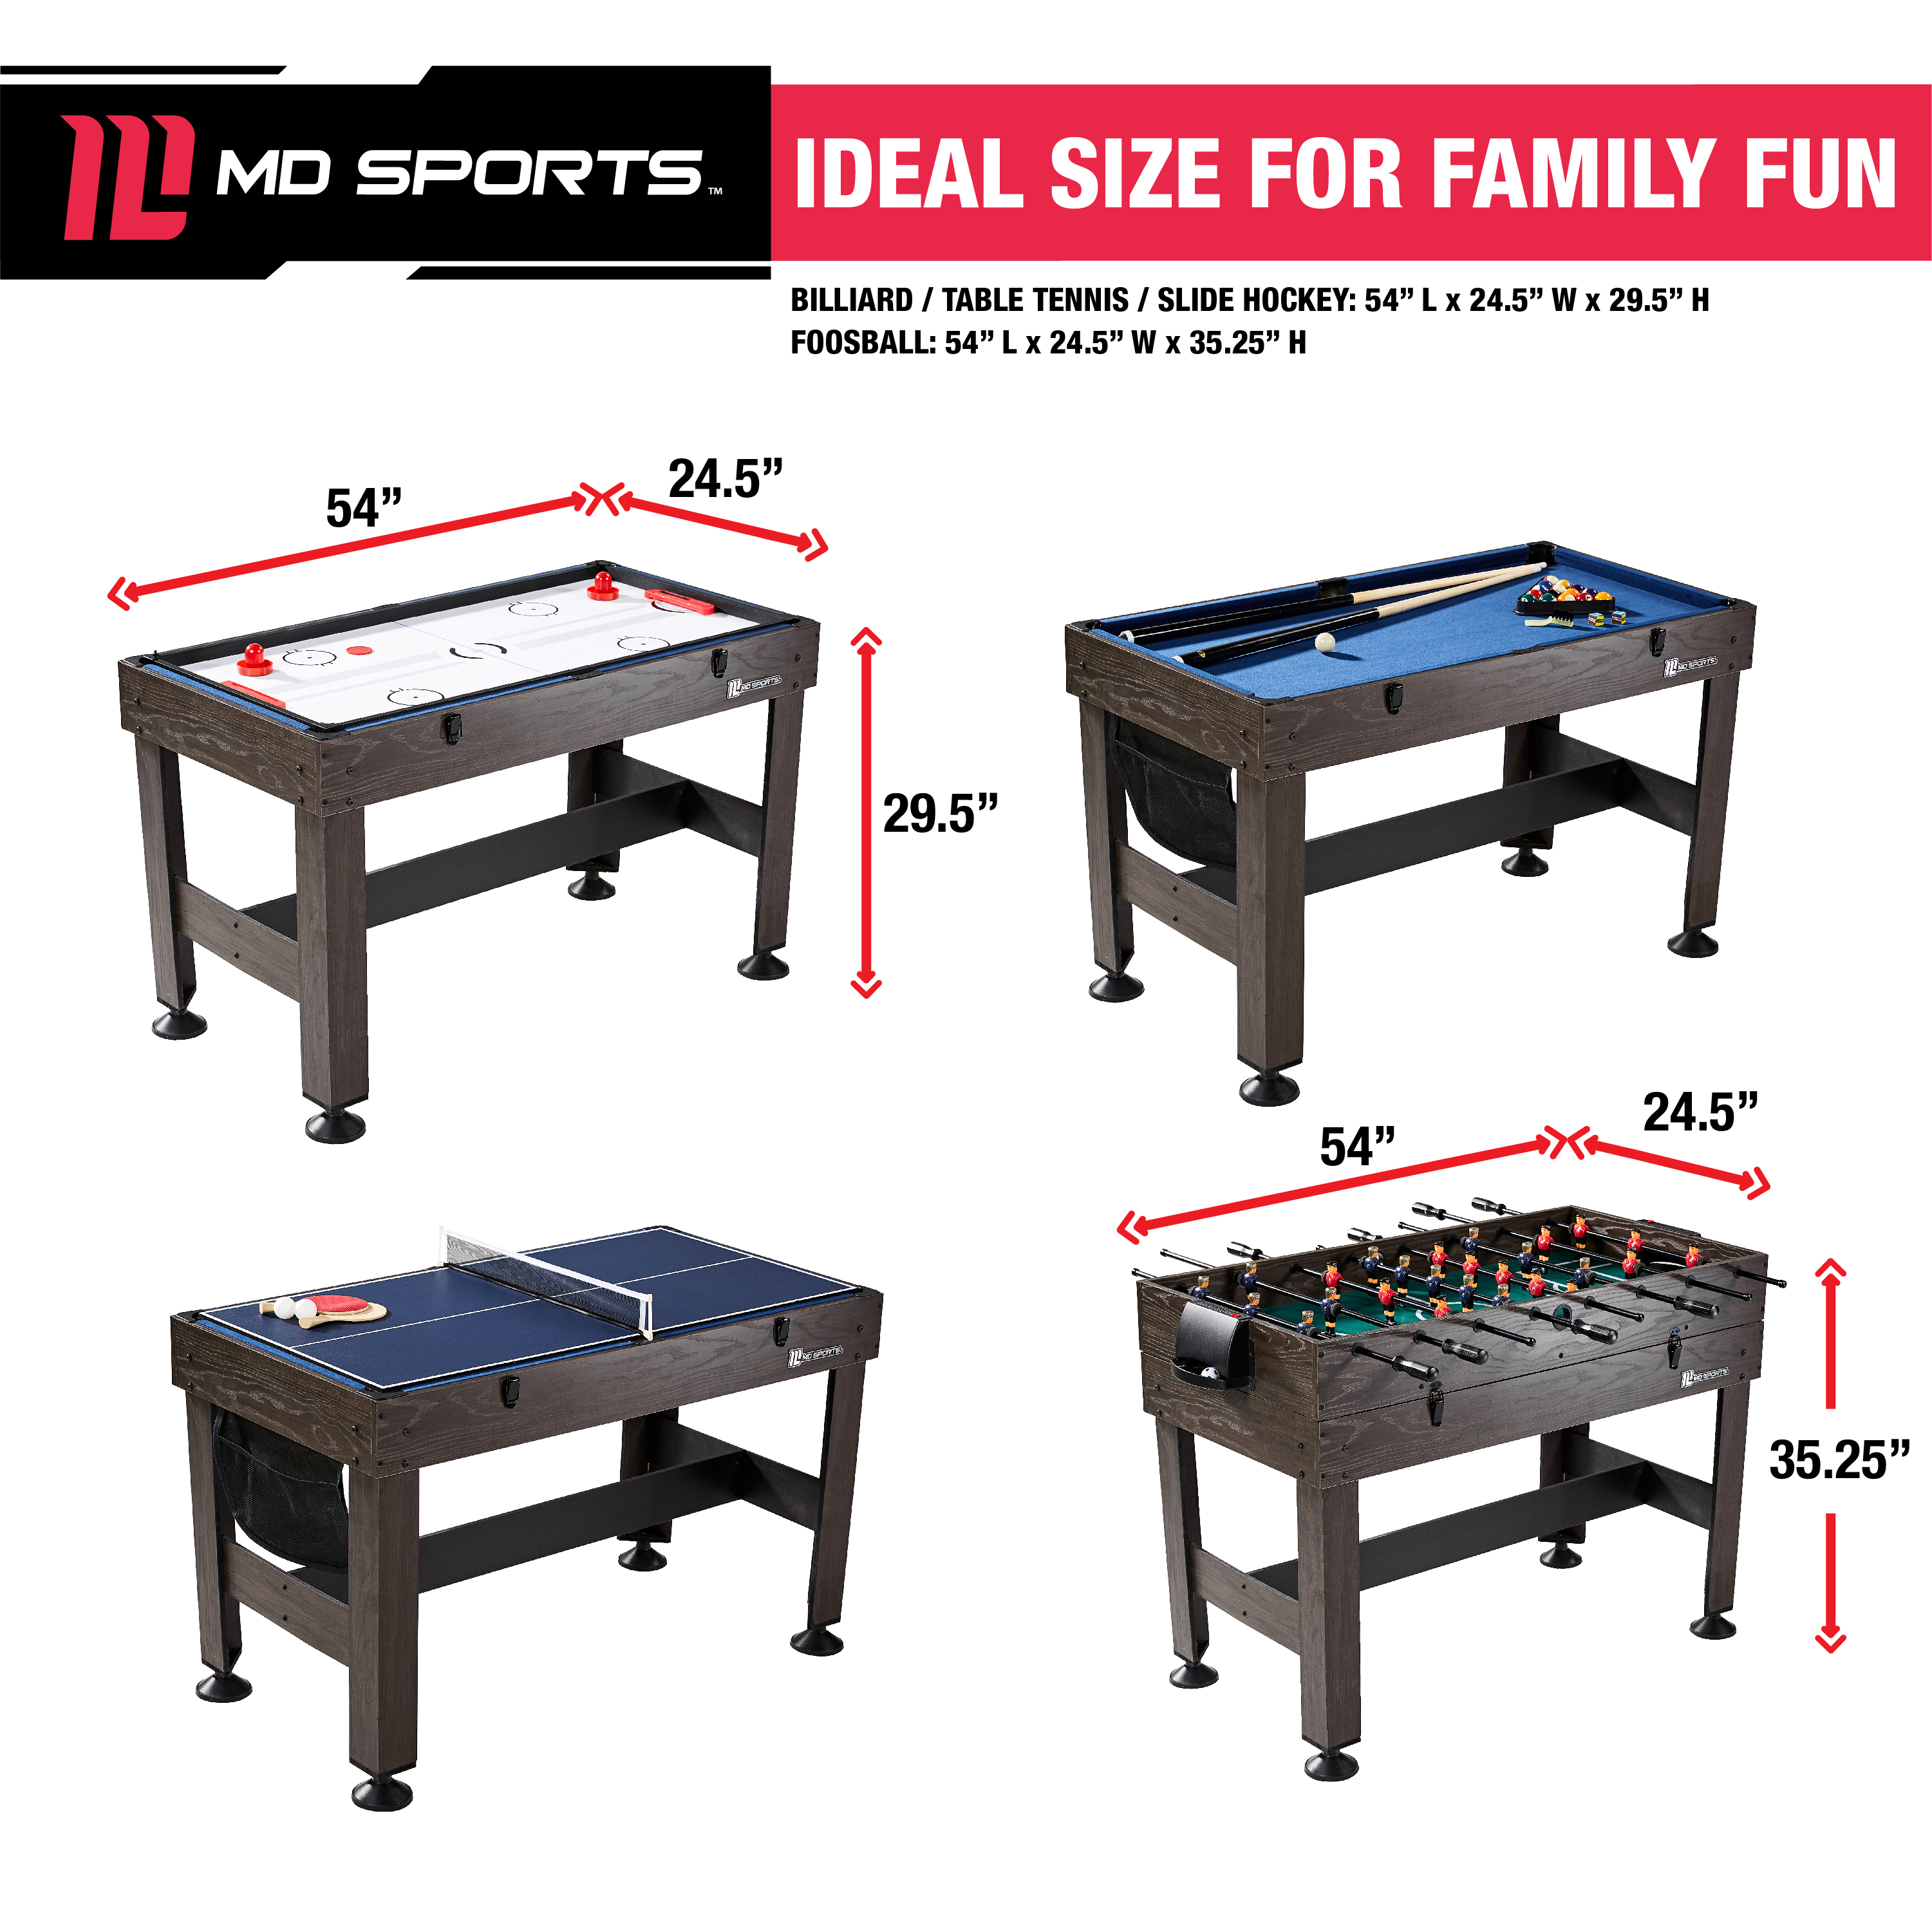 MD Sports 54" 4 in 1 Foosball, Slide Hockey, Table Tennis, Pool Game Table - image 5 of 6